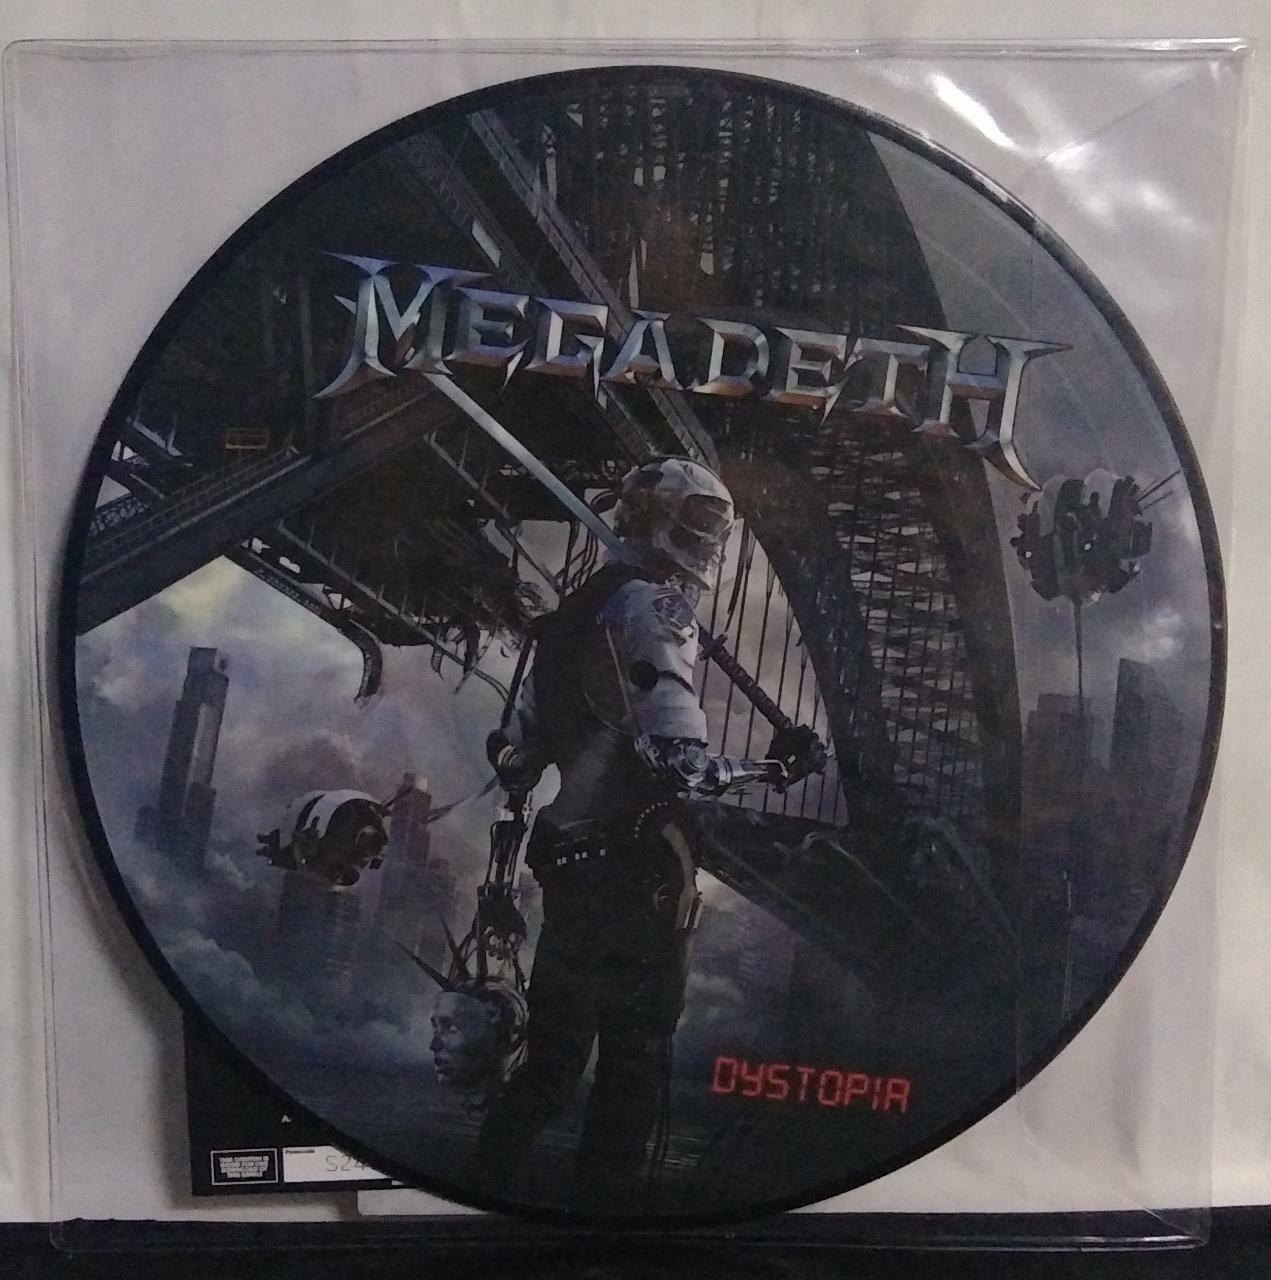 Vinil - Megadeth - Dystopia (USA/Picture)